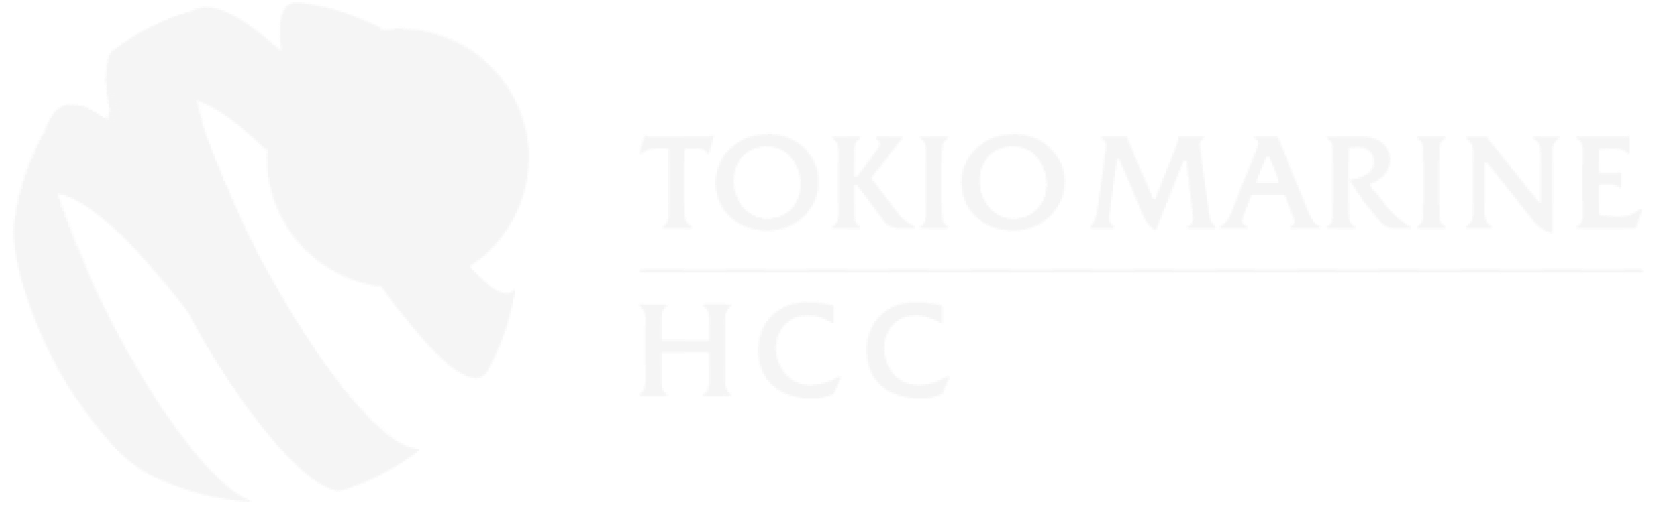 506-5068225_tokio-marine-hcc-logo-hd-png-download 1